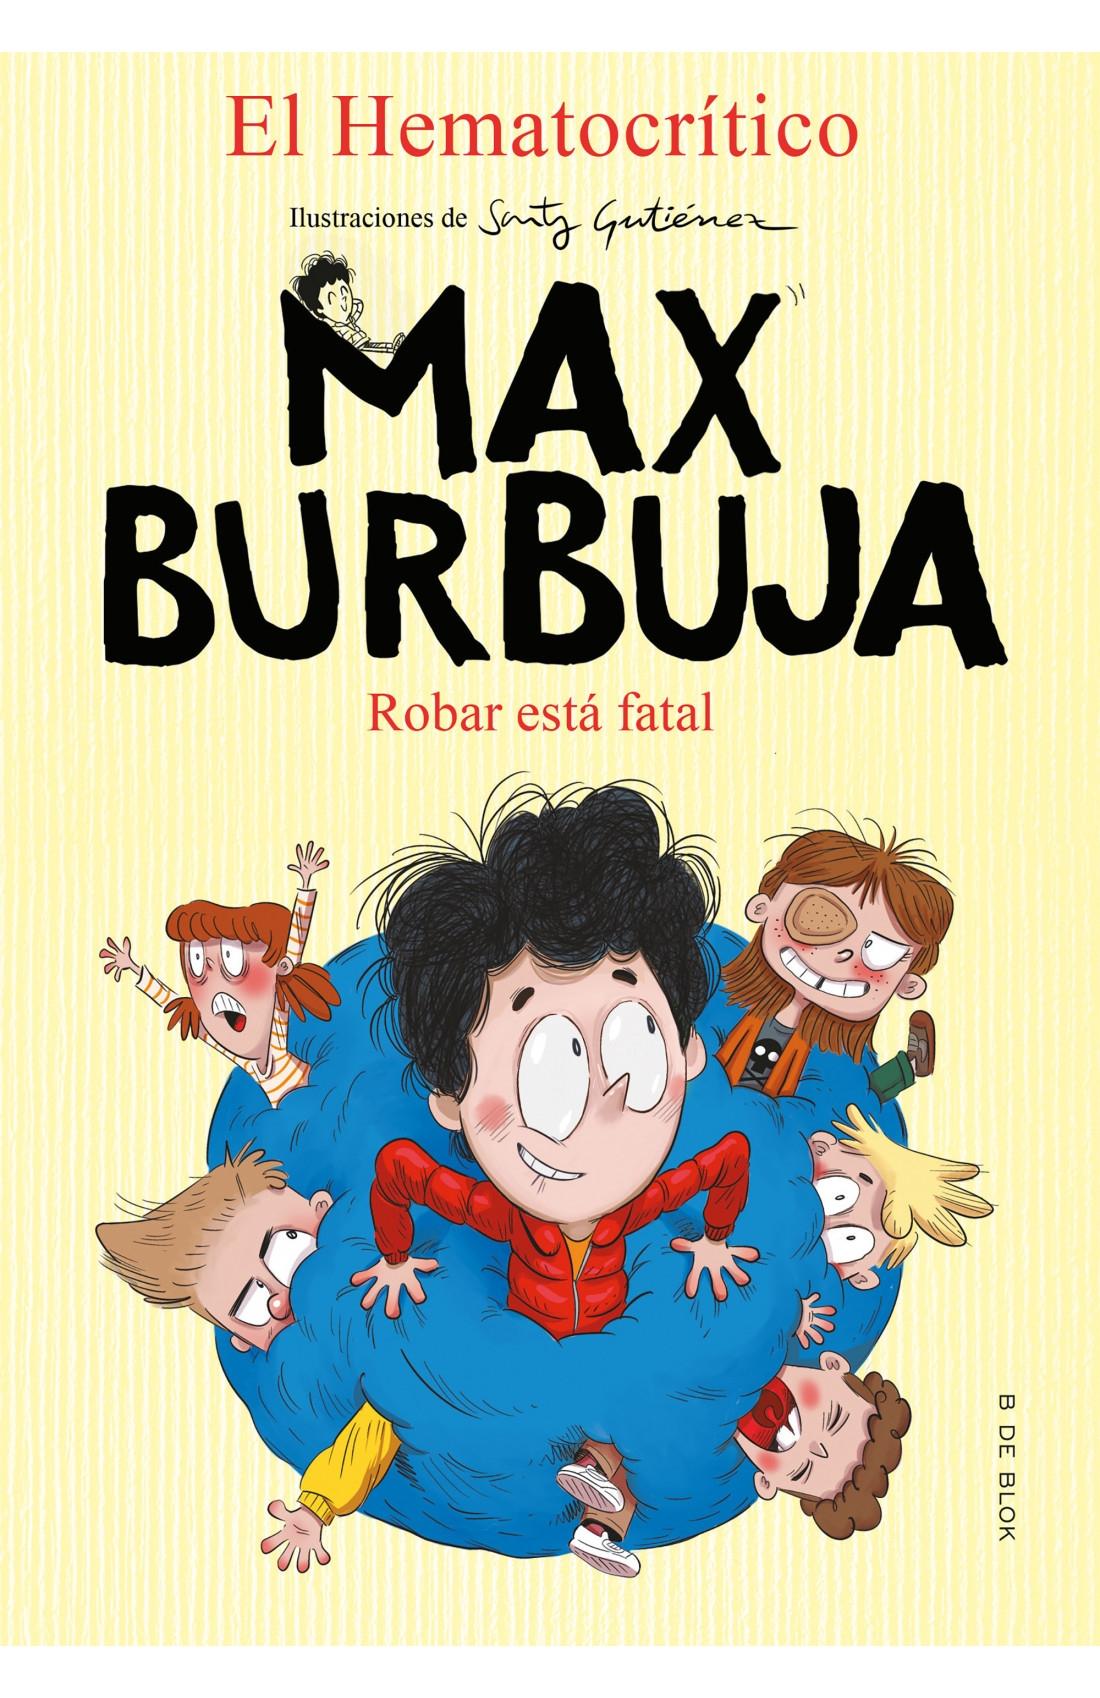 Max Burbuja 2 "Robar está fatal". 